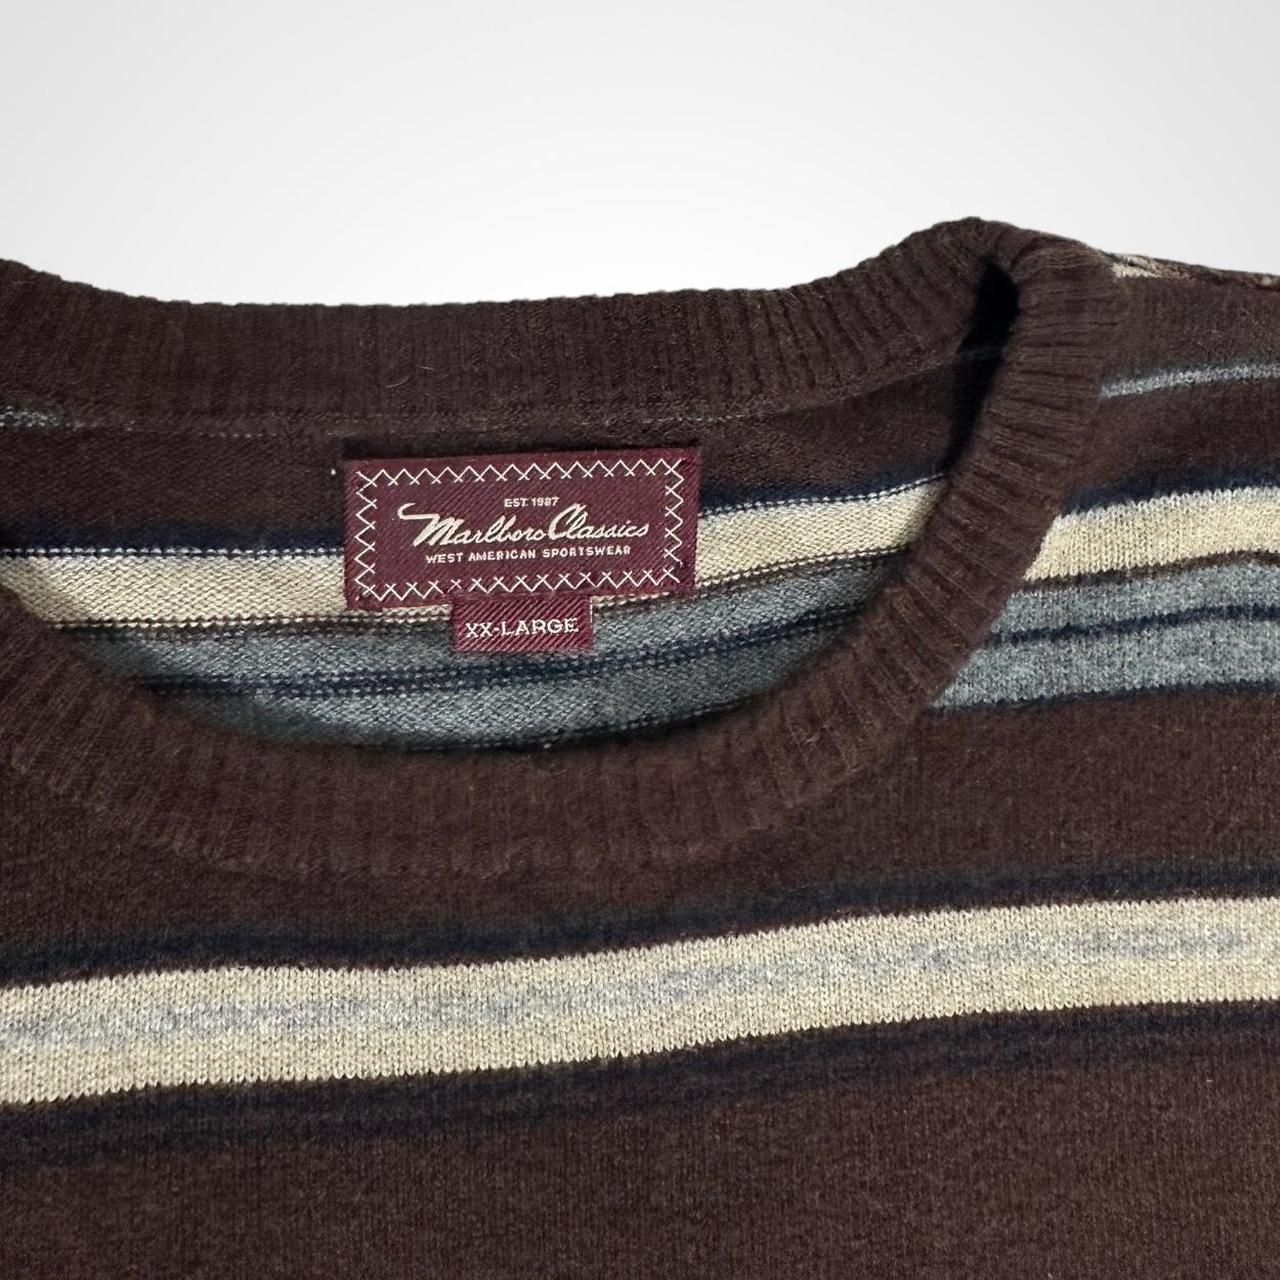 Vintage 90s Marlboro Classics brown striped oversized jumper